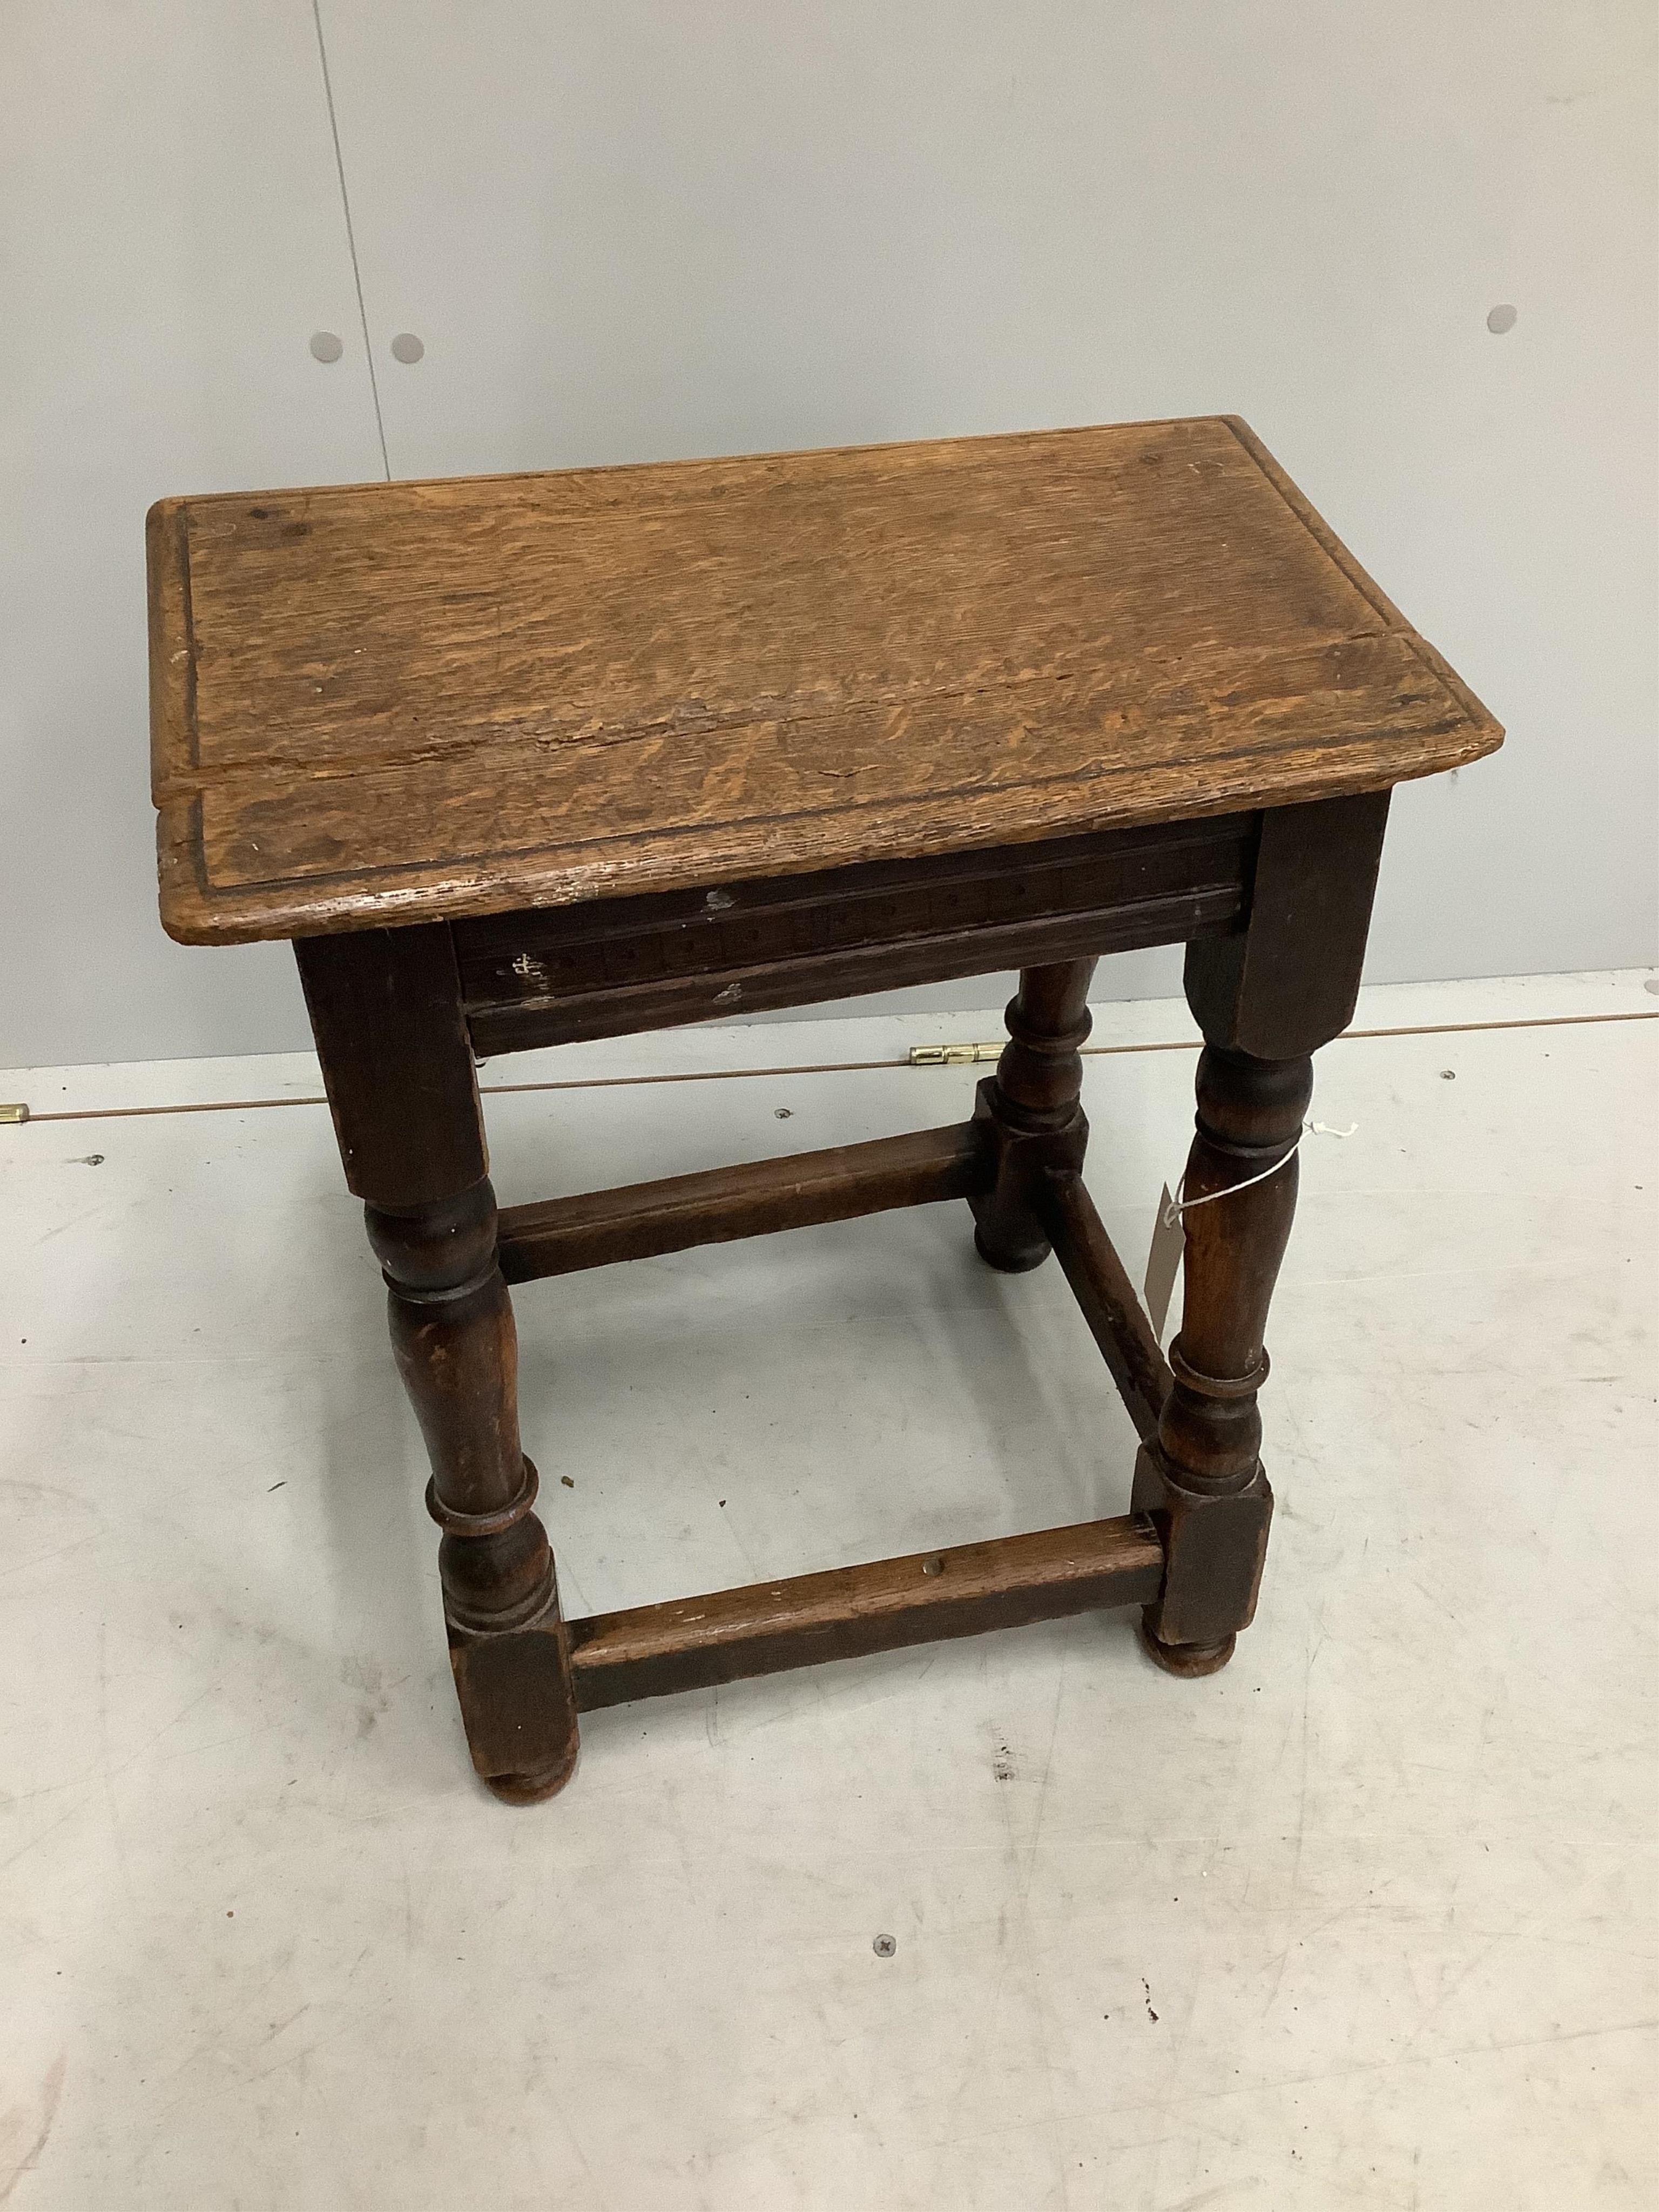 An 18th century style oak joint stool, width 44cm, depth 25cm, height 53cm